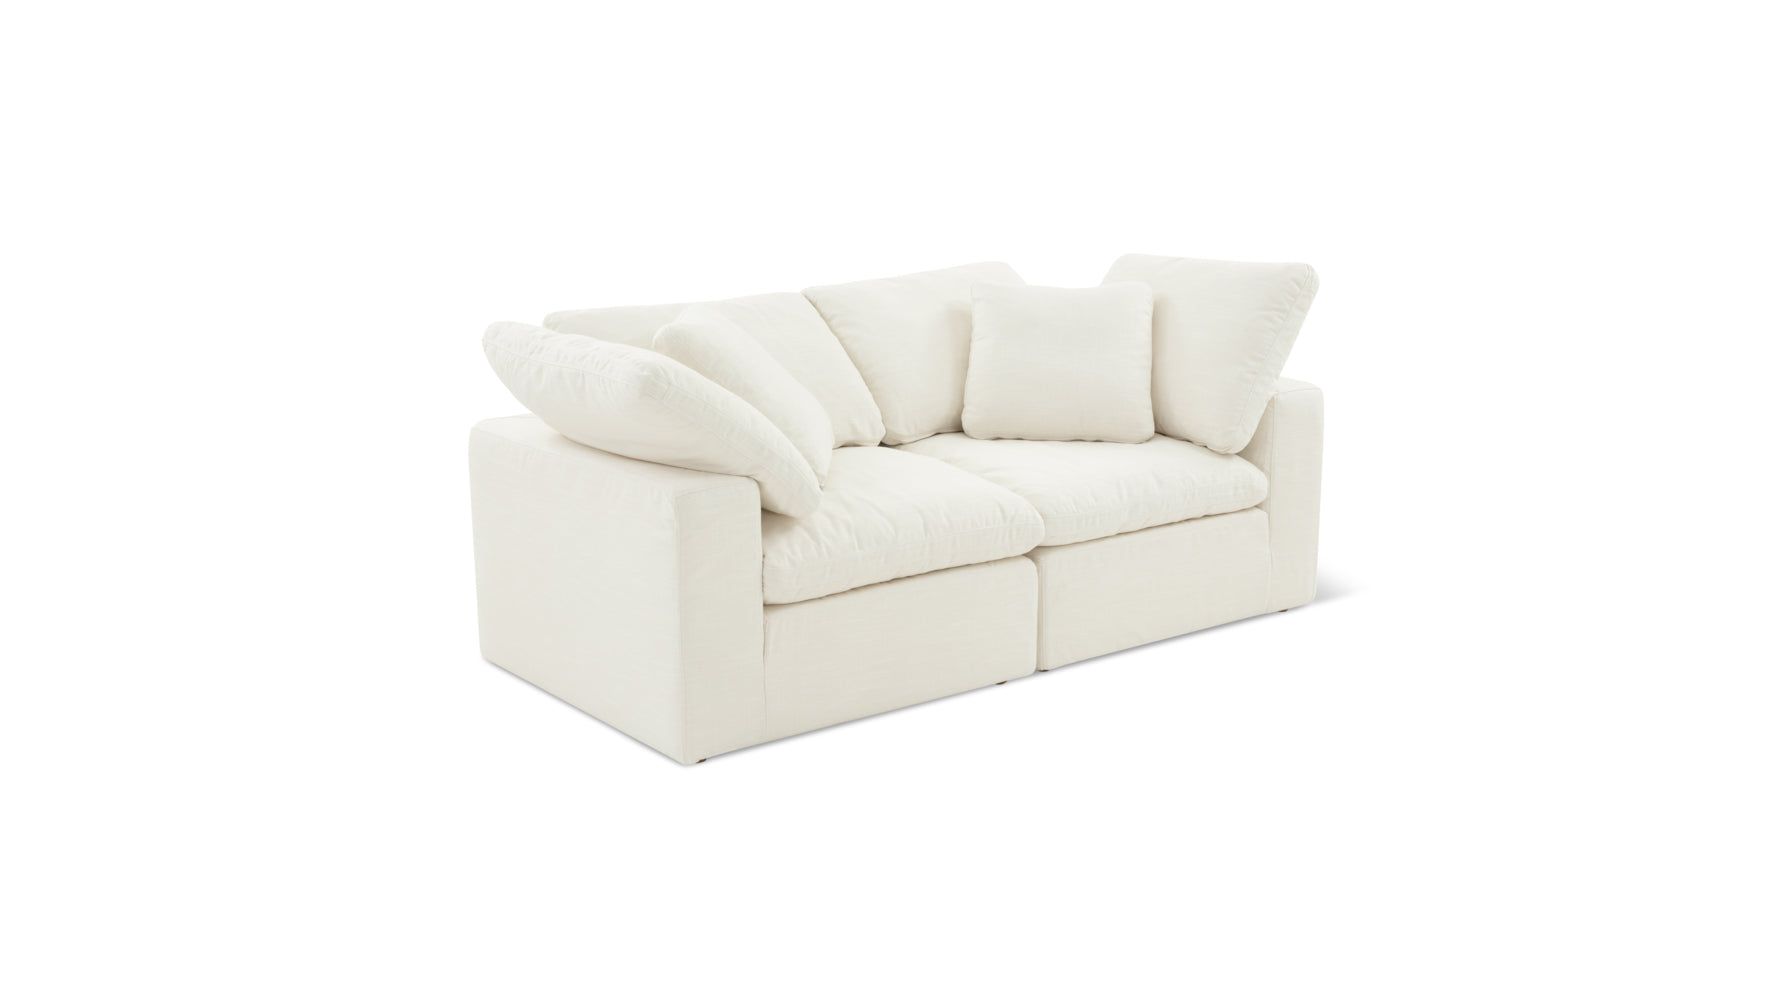 Movie Night™ 2-Piece Modular Sofa, Large, Cream Linen - Image 4